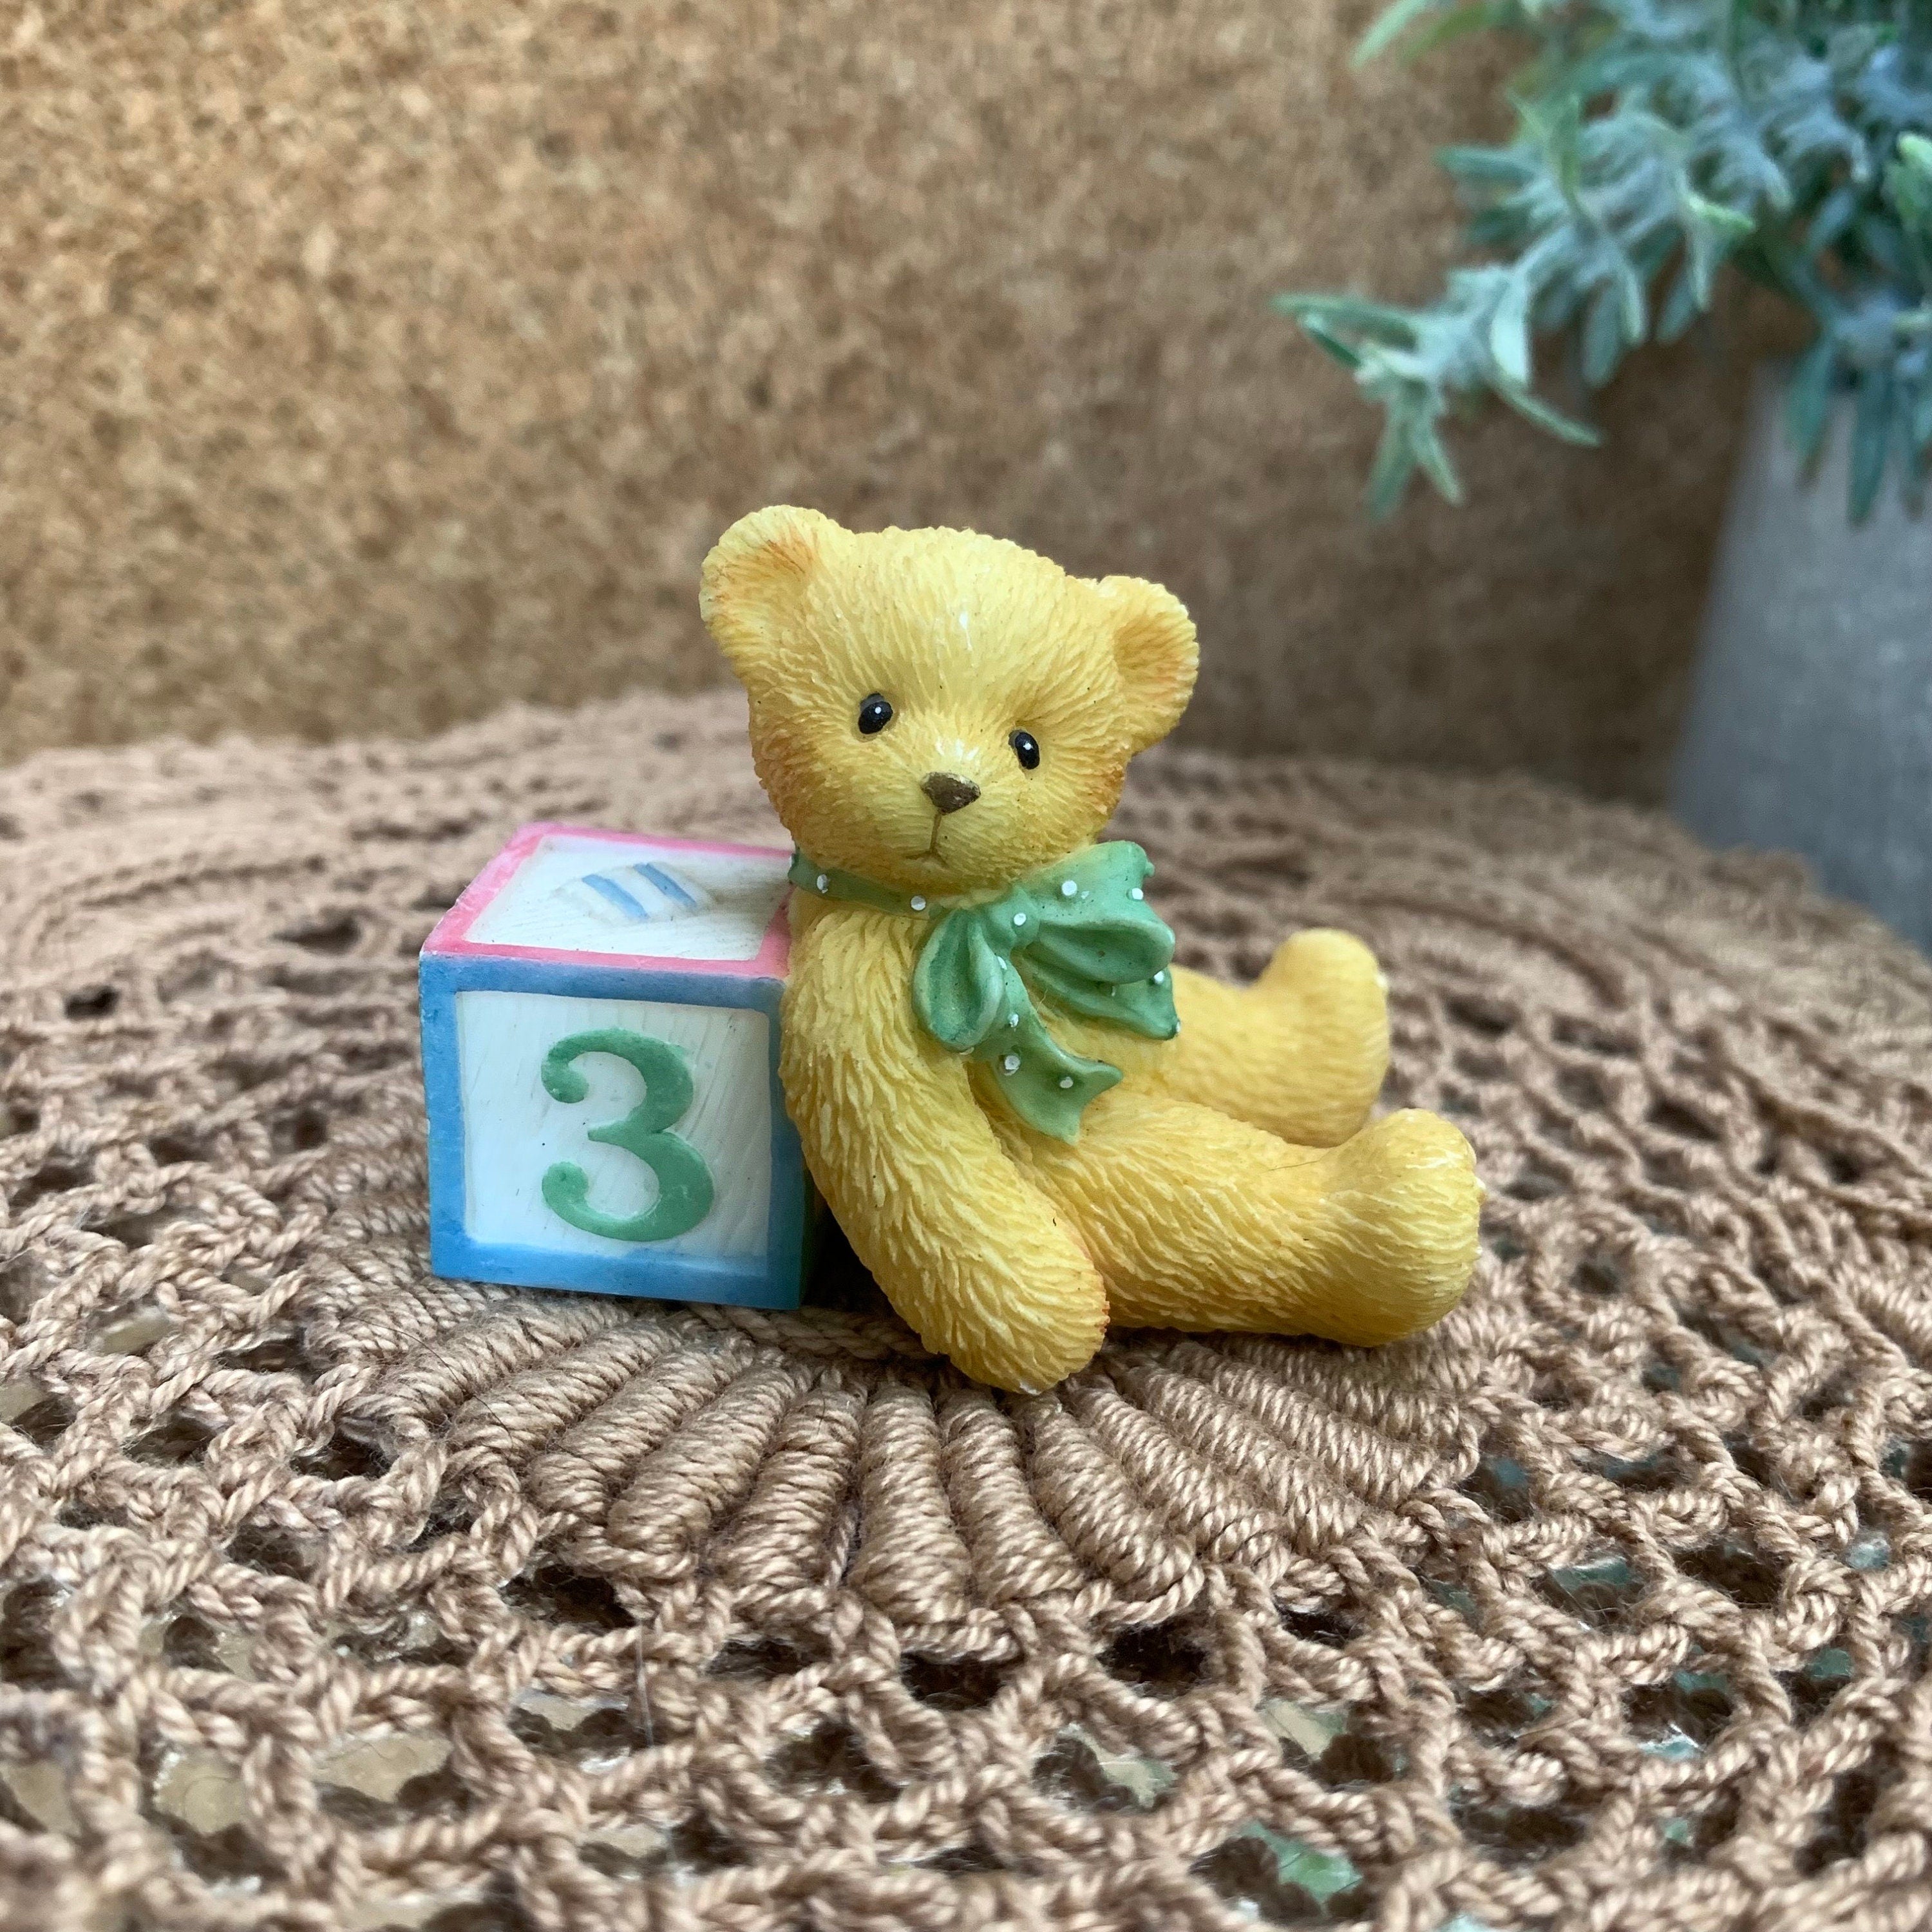 Vintage Collectible Teddy Bear by Priscilla Hillman